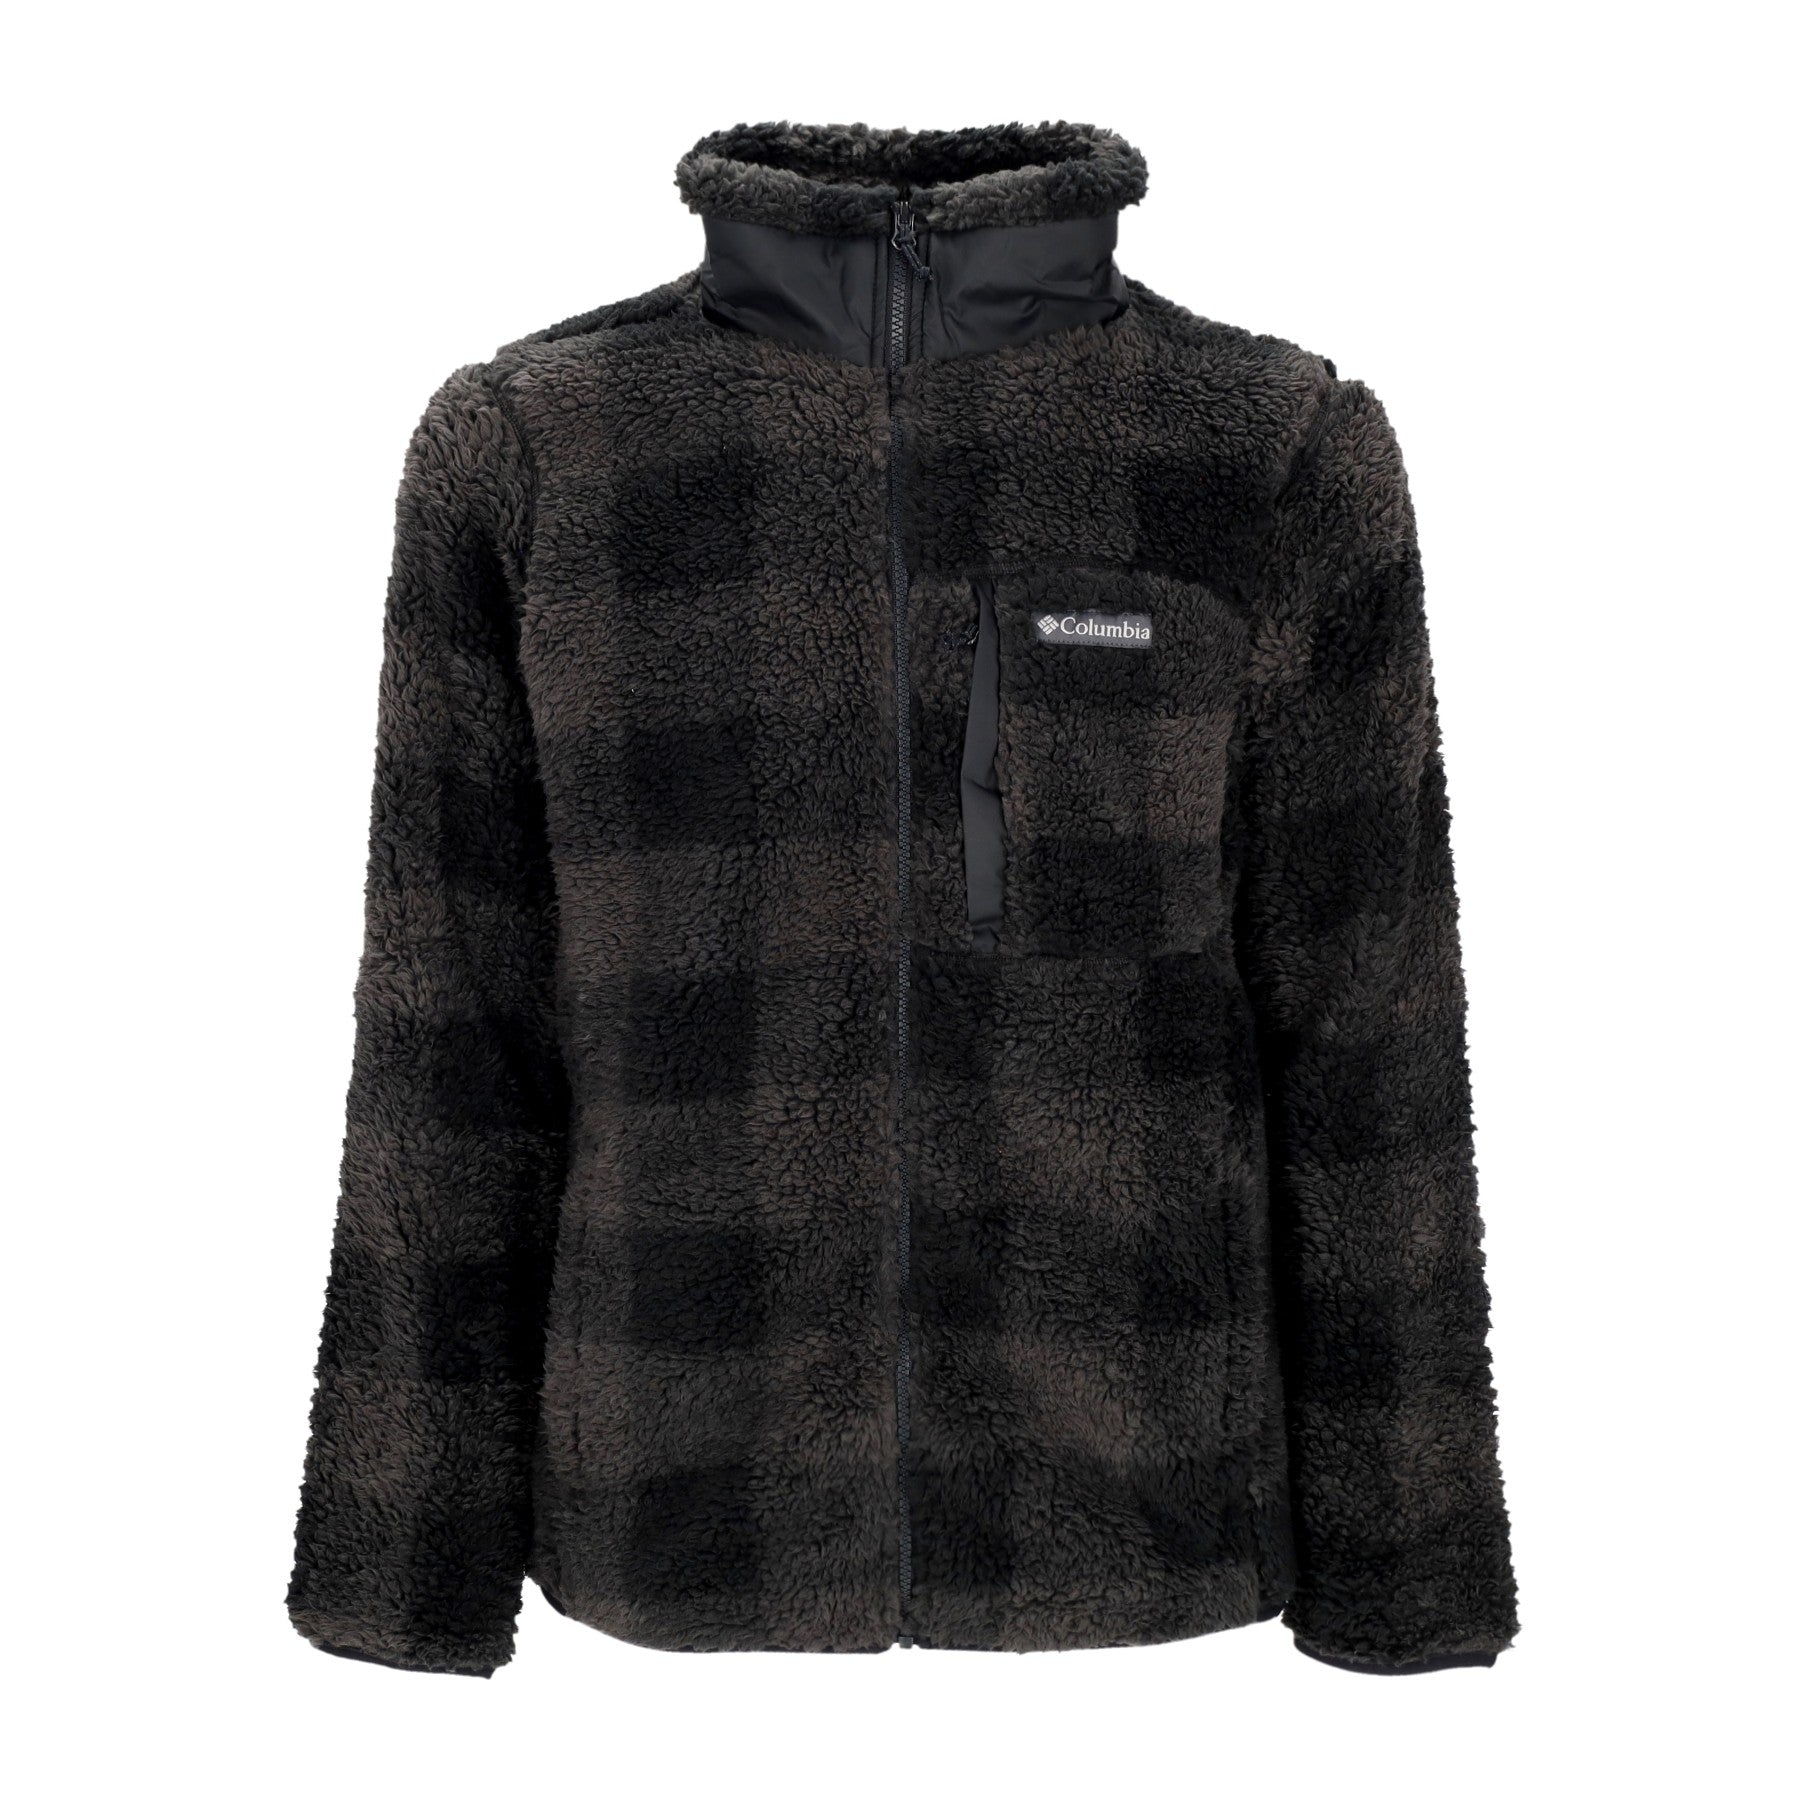 Orsetto Uomo Winter Pass Print Fleece Full Zip Black Checkered